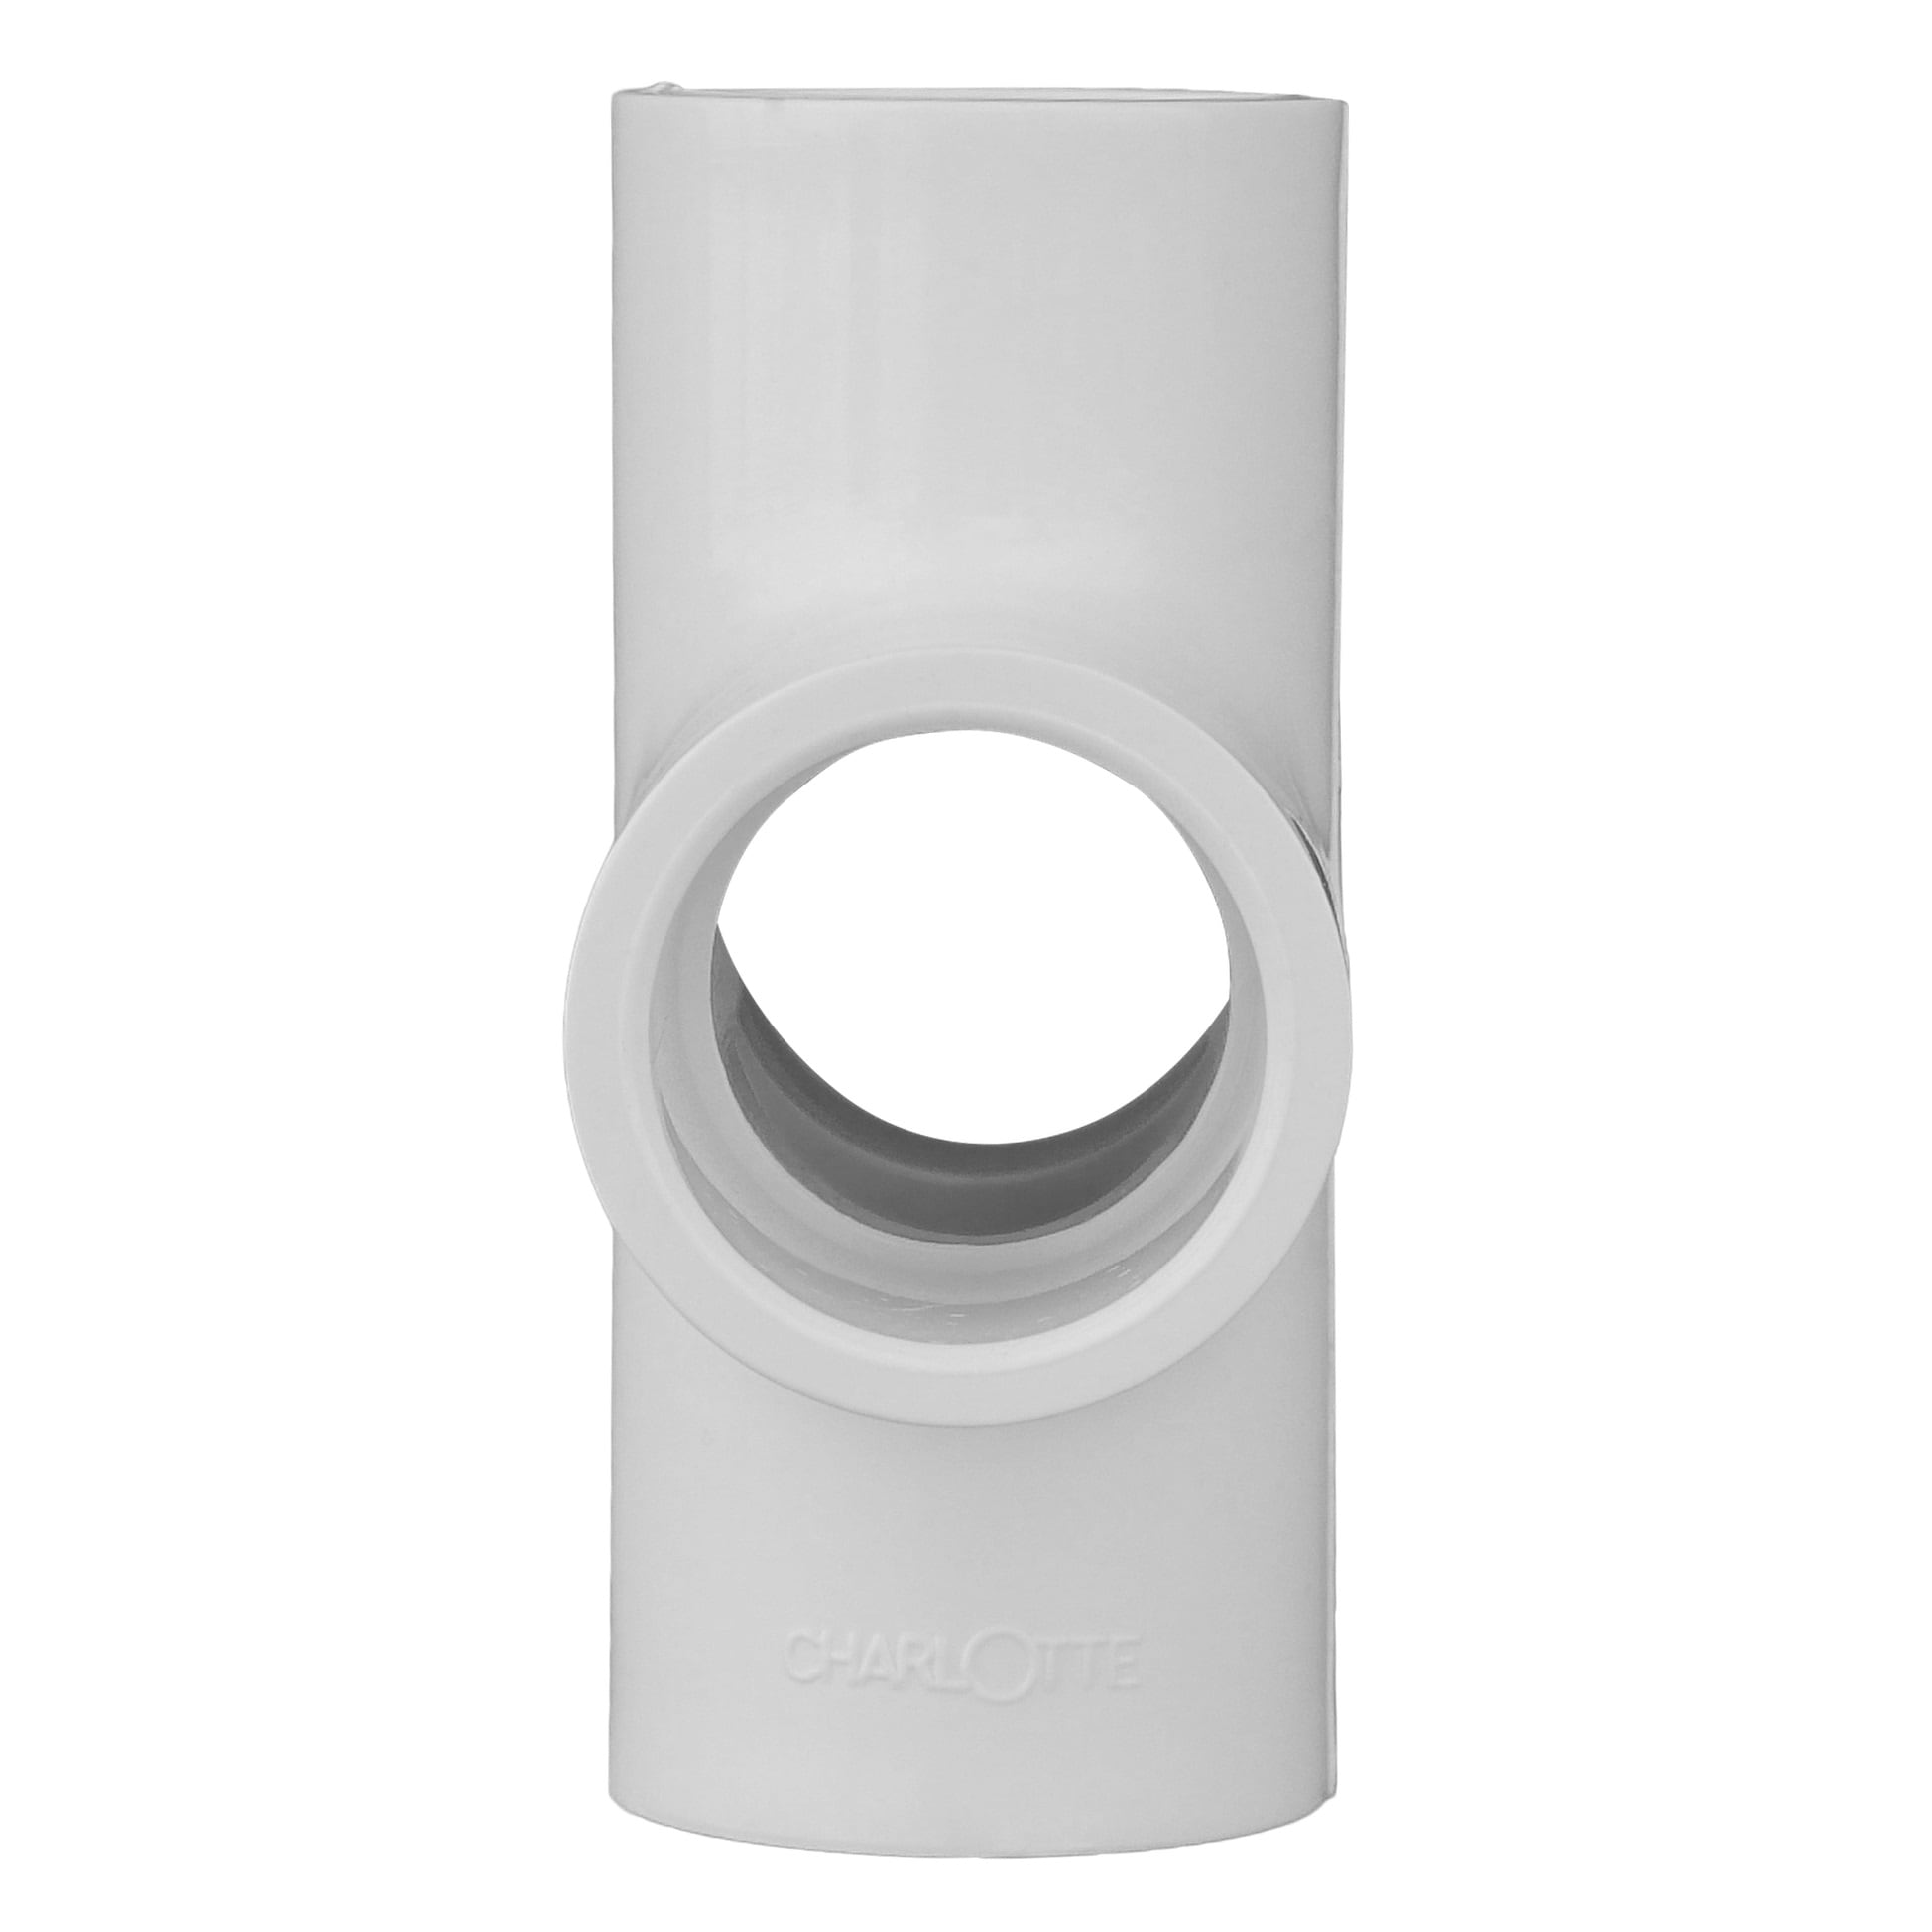  PVC Pipe Sch. 40 3 Inch (3.0) White Custom Length